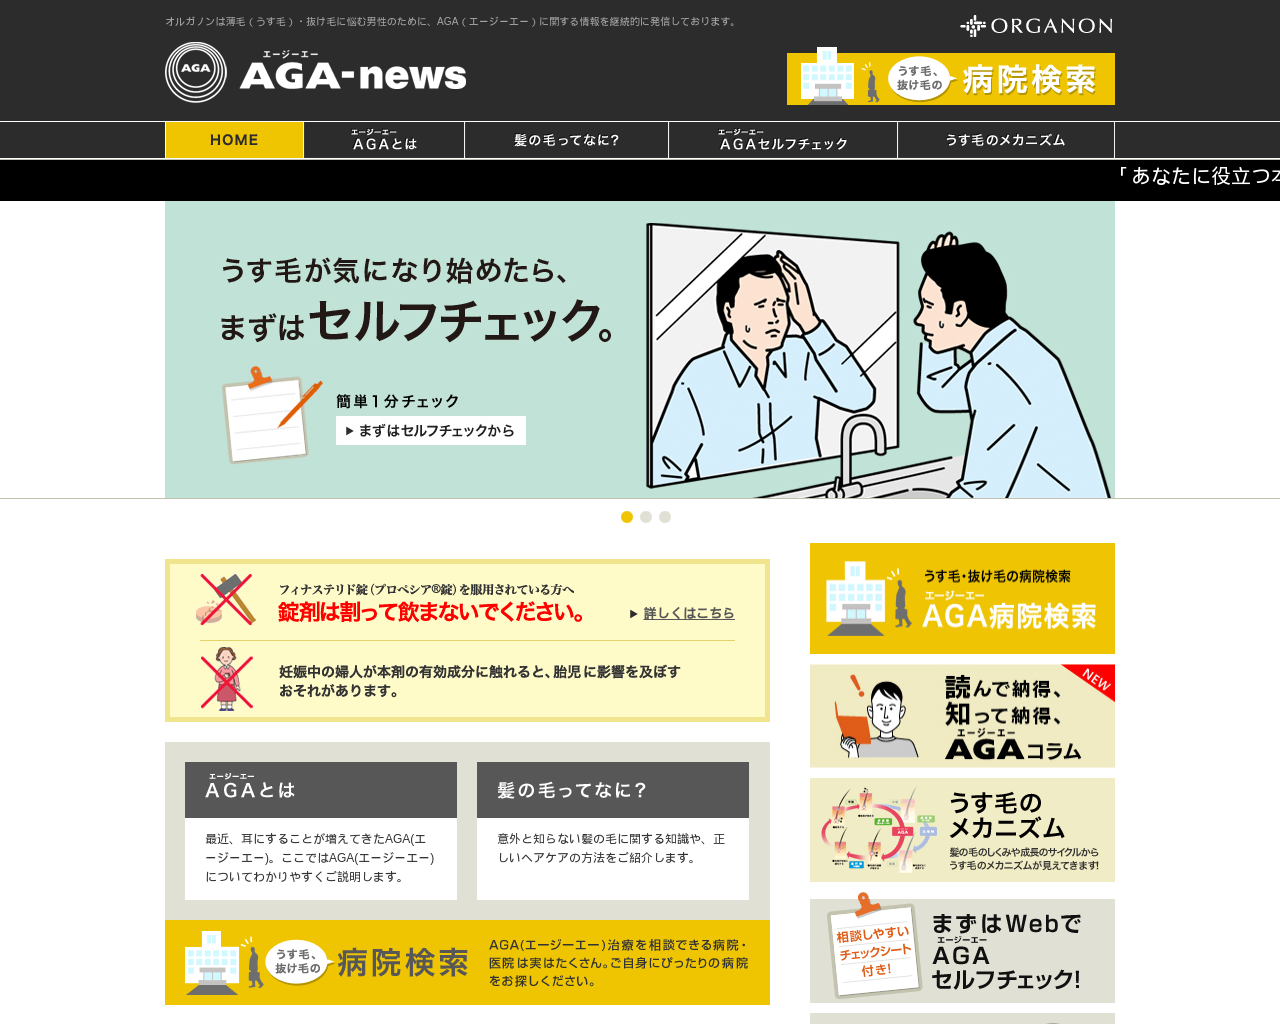 aga-news.jp